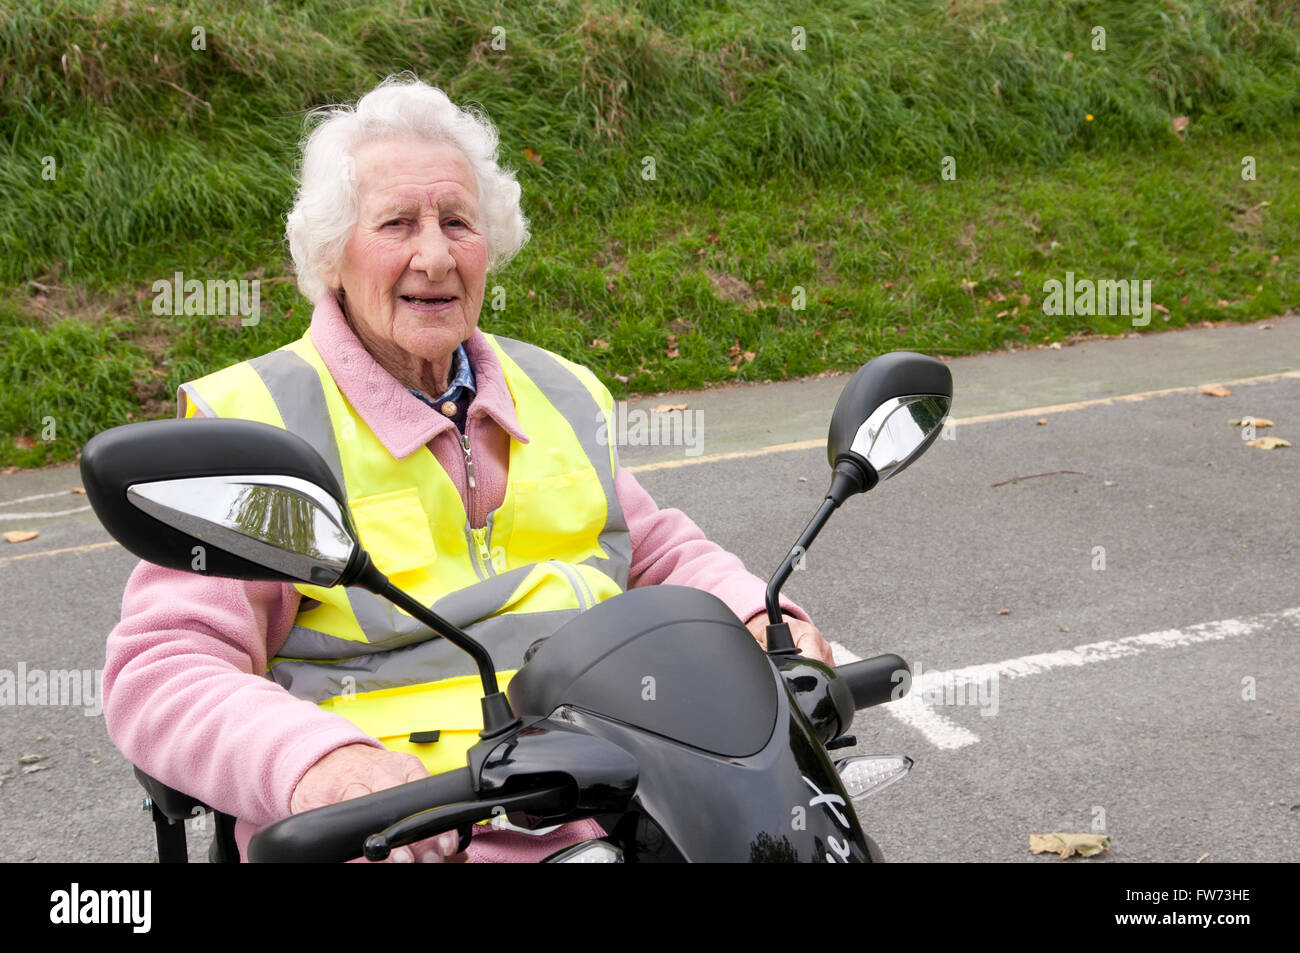 portrait-of-an-elderly-woman-sitting-in-her-mobility-scooter-wearing-FW73HE.jpg